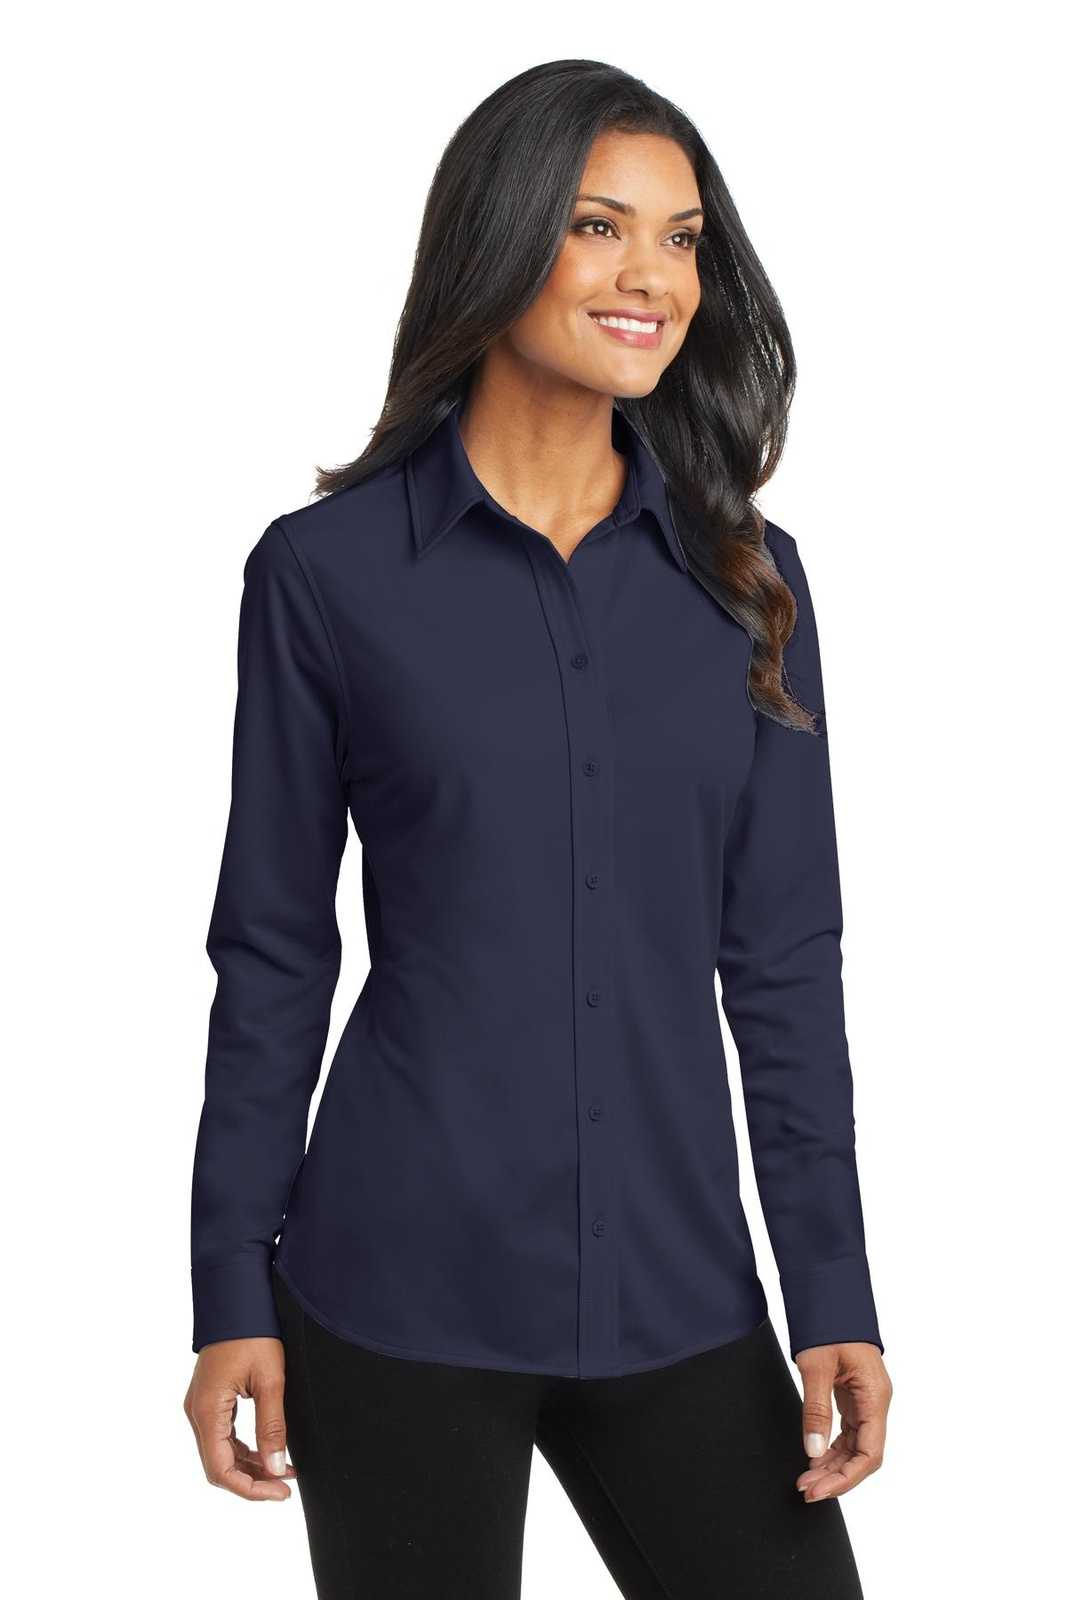 Port Authority L570 Ladies Dimension Knit Dress Shirt - Dark Navy - HIT a Double - 4